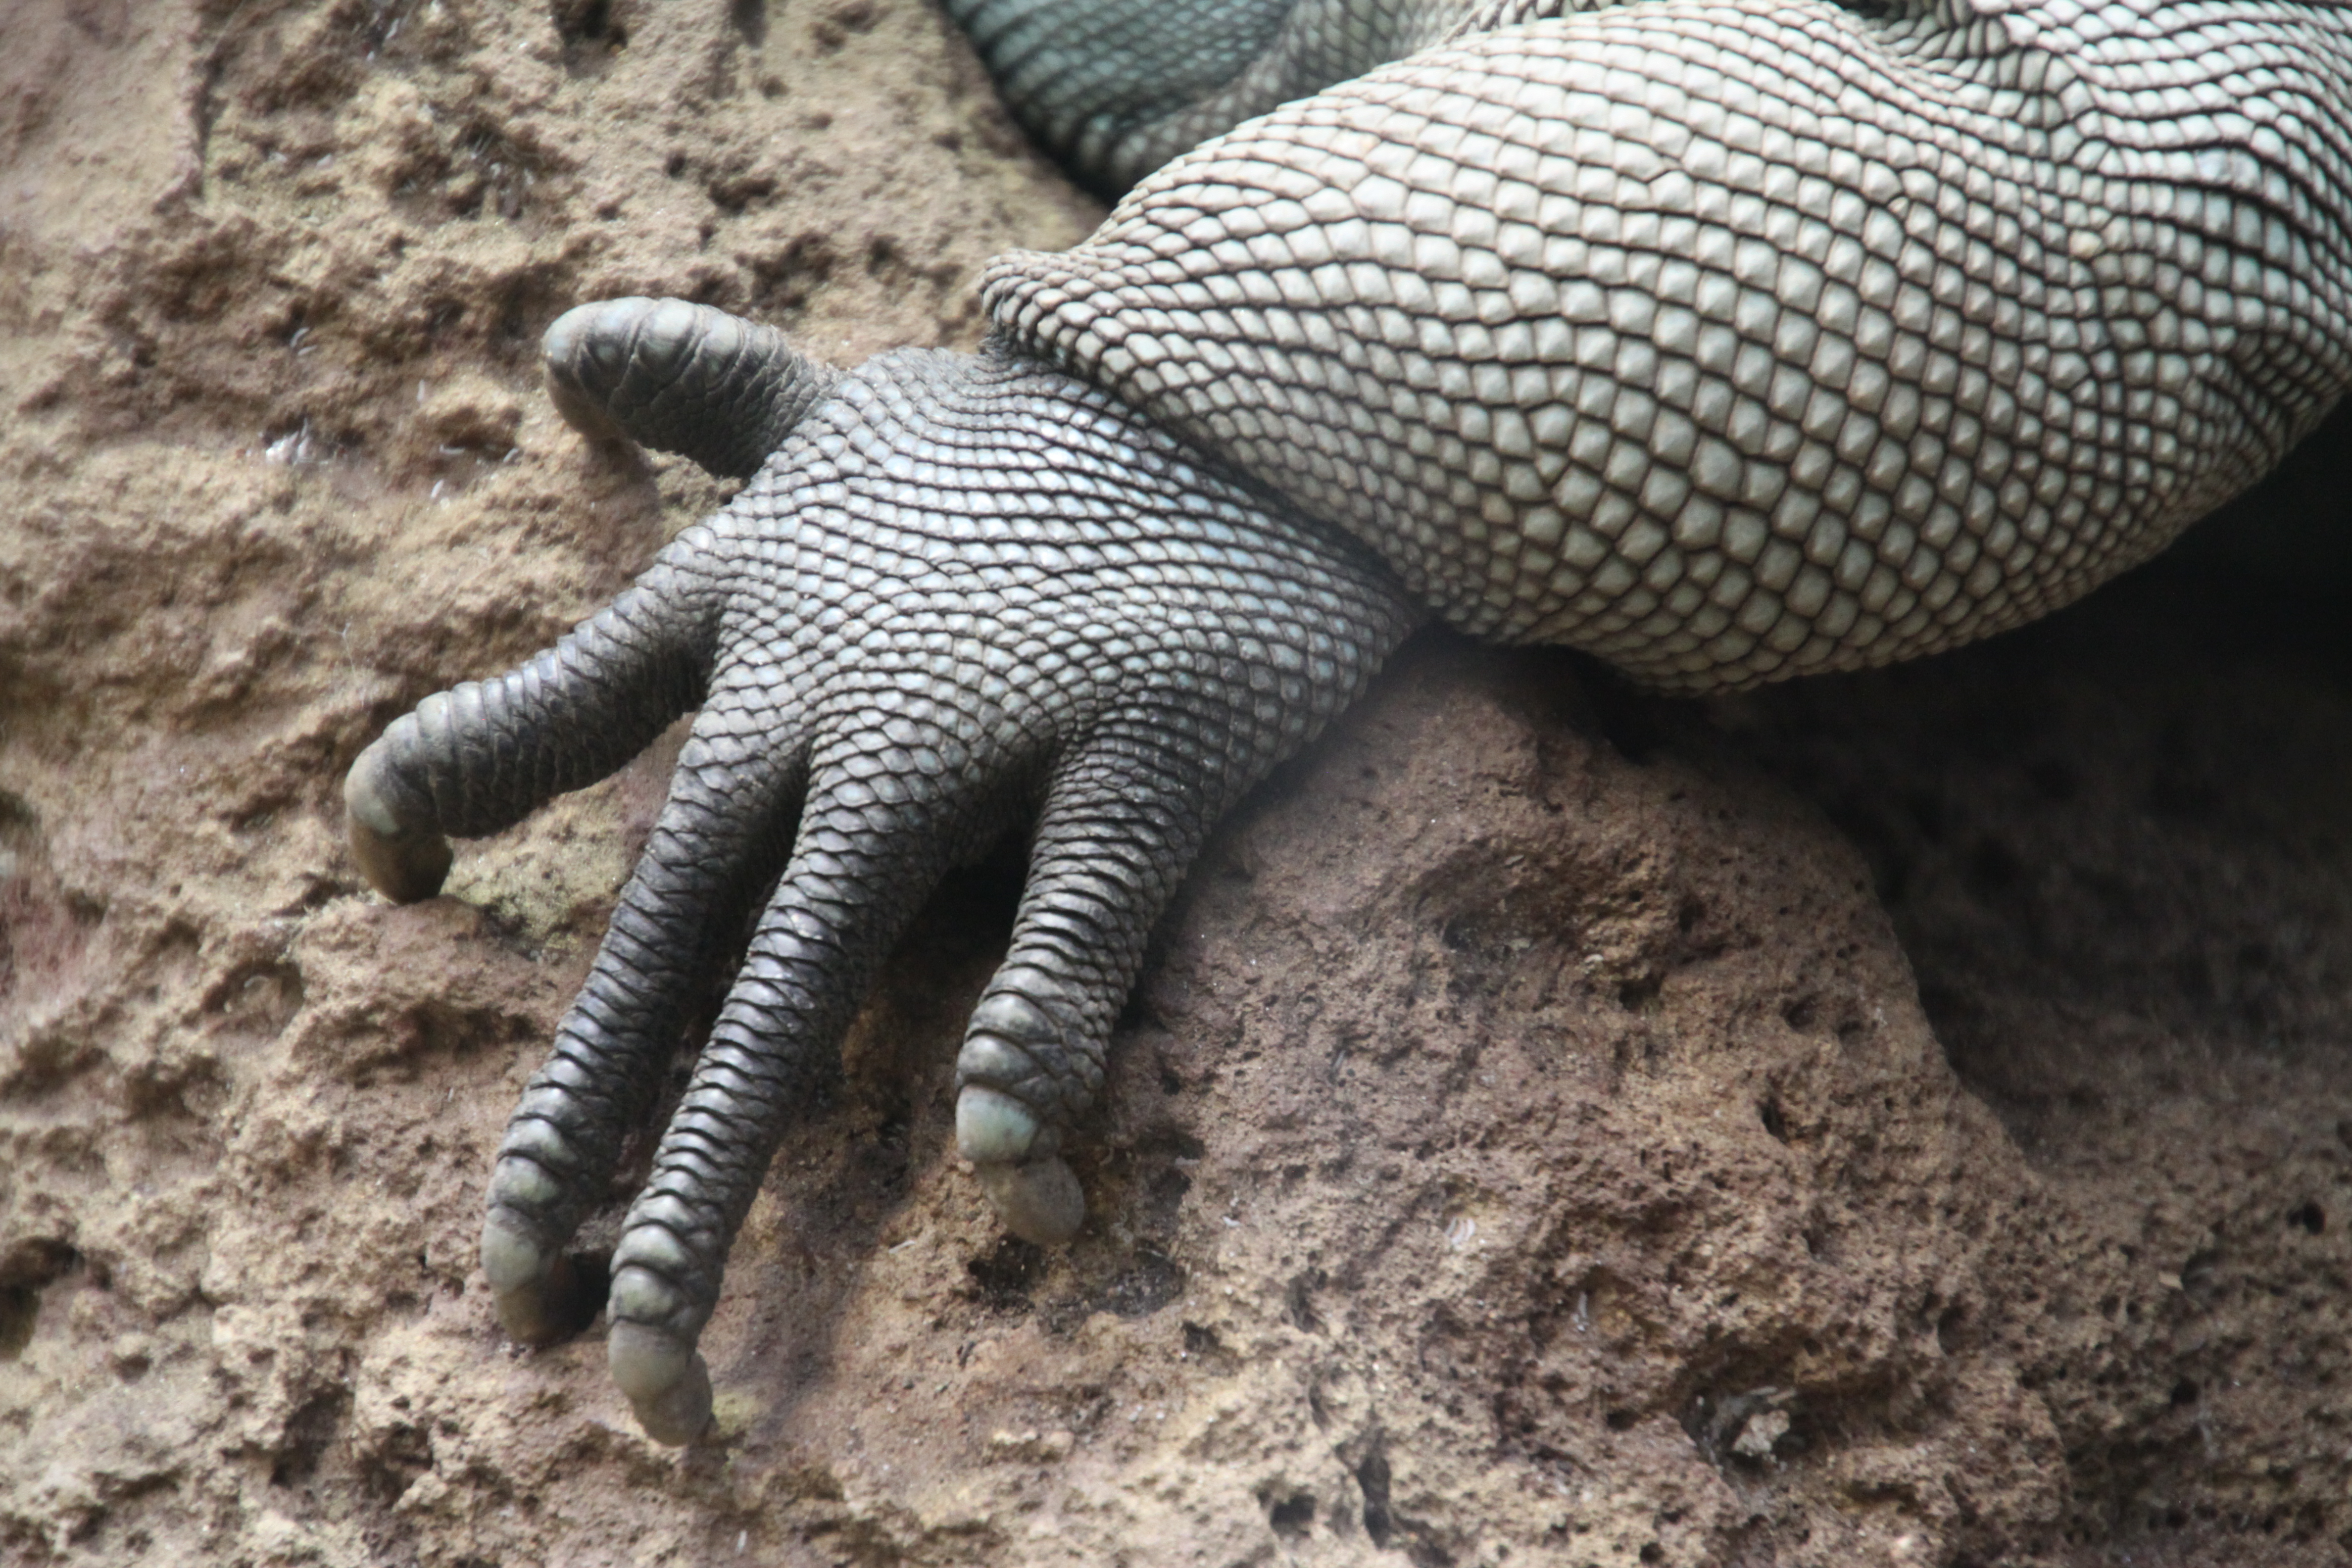 lizard hand | Creature Ref: Hands, Feet, Paws and Such | Pinterest ...